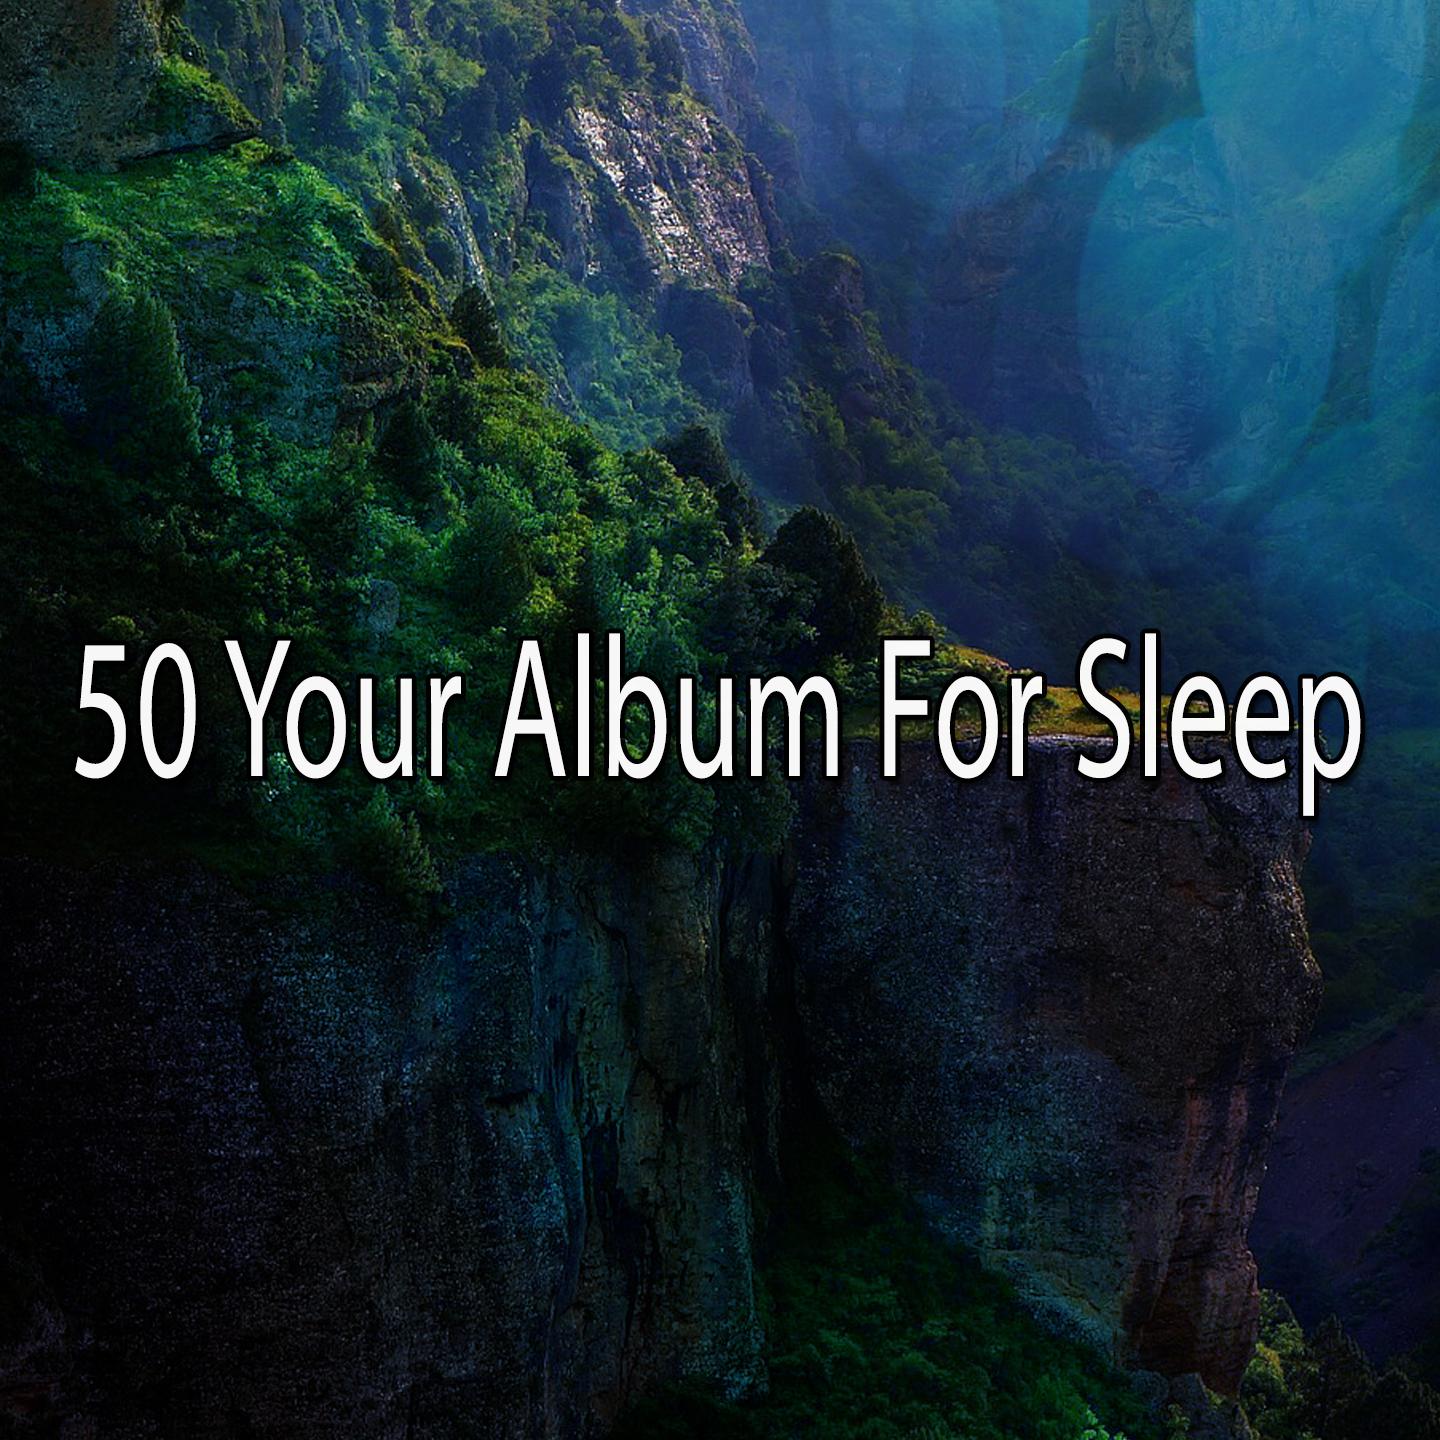 50 Your Album for Sleep